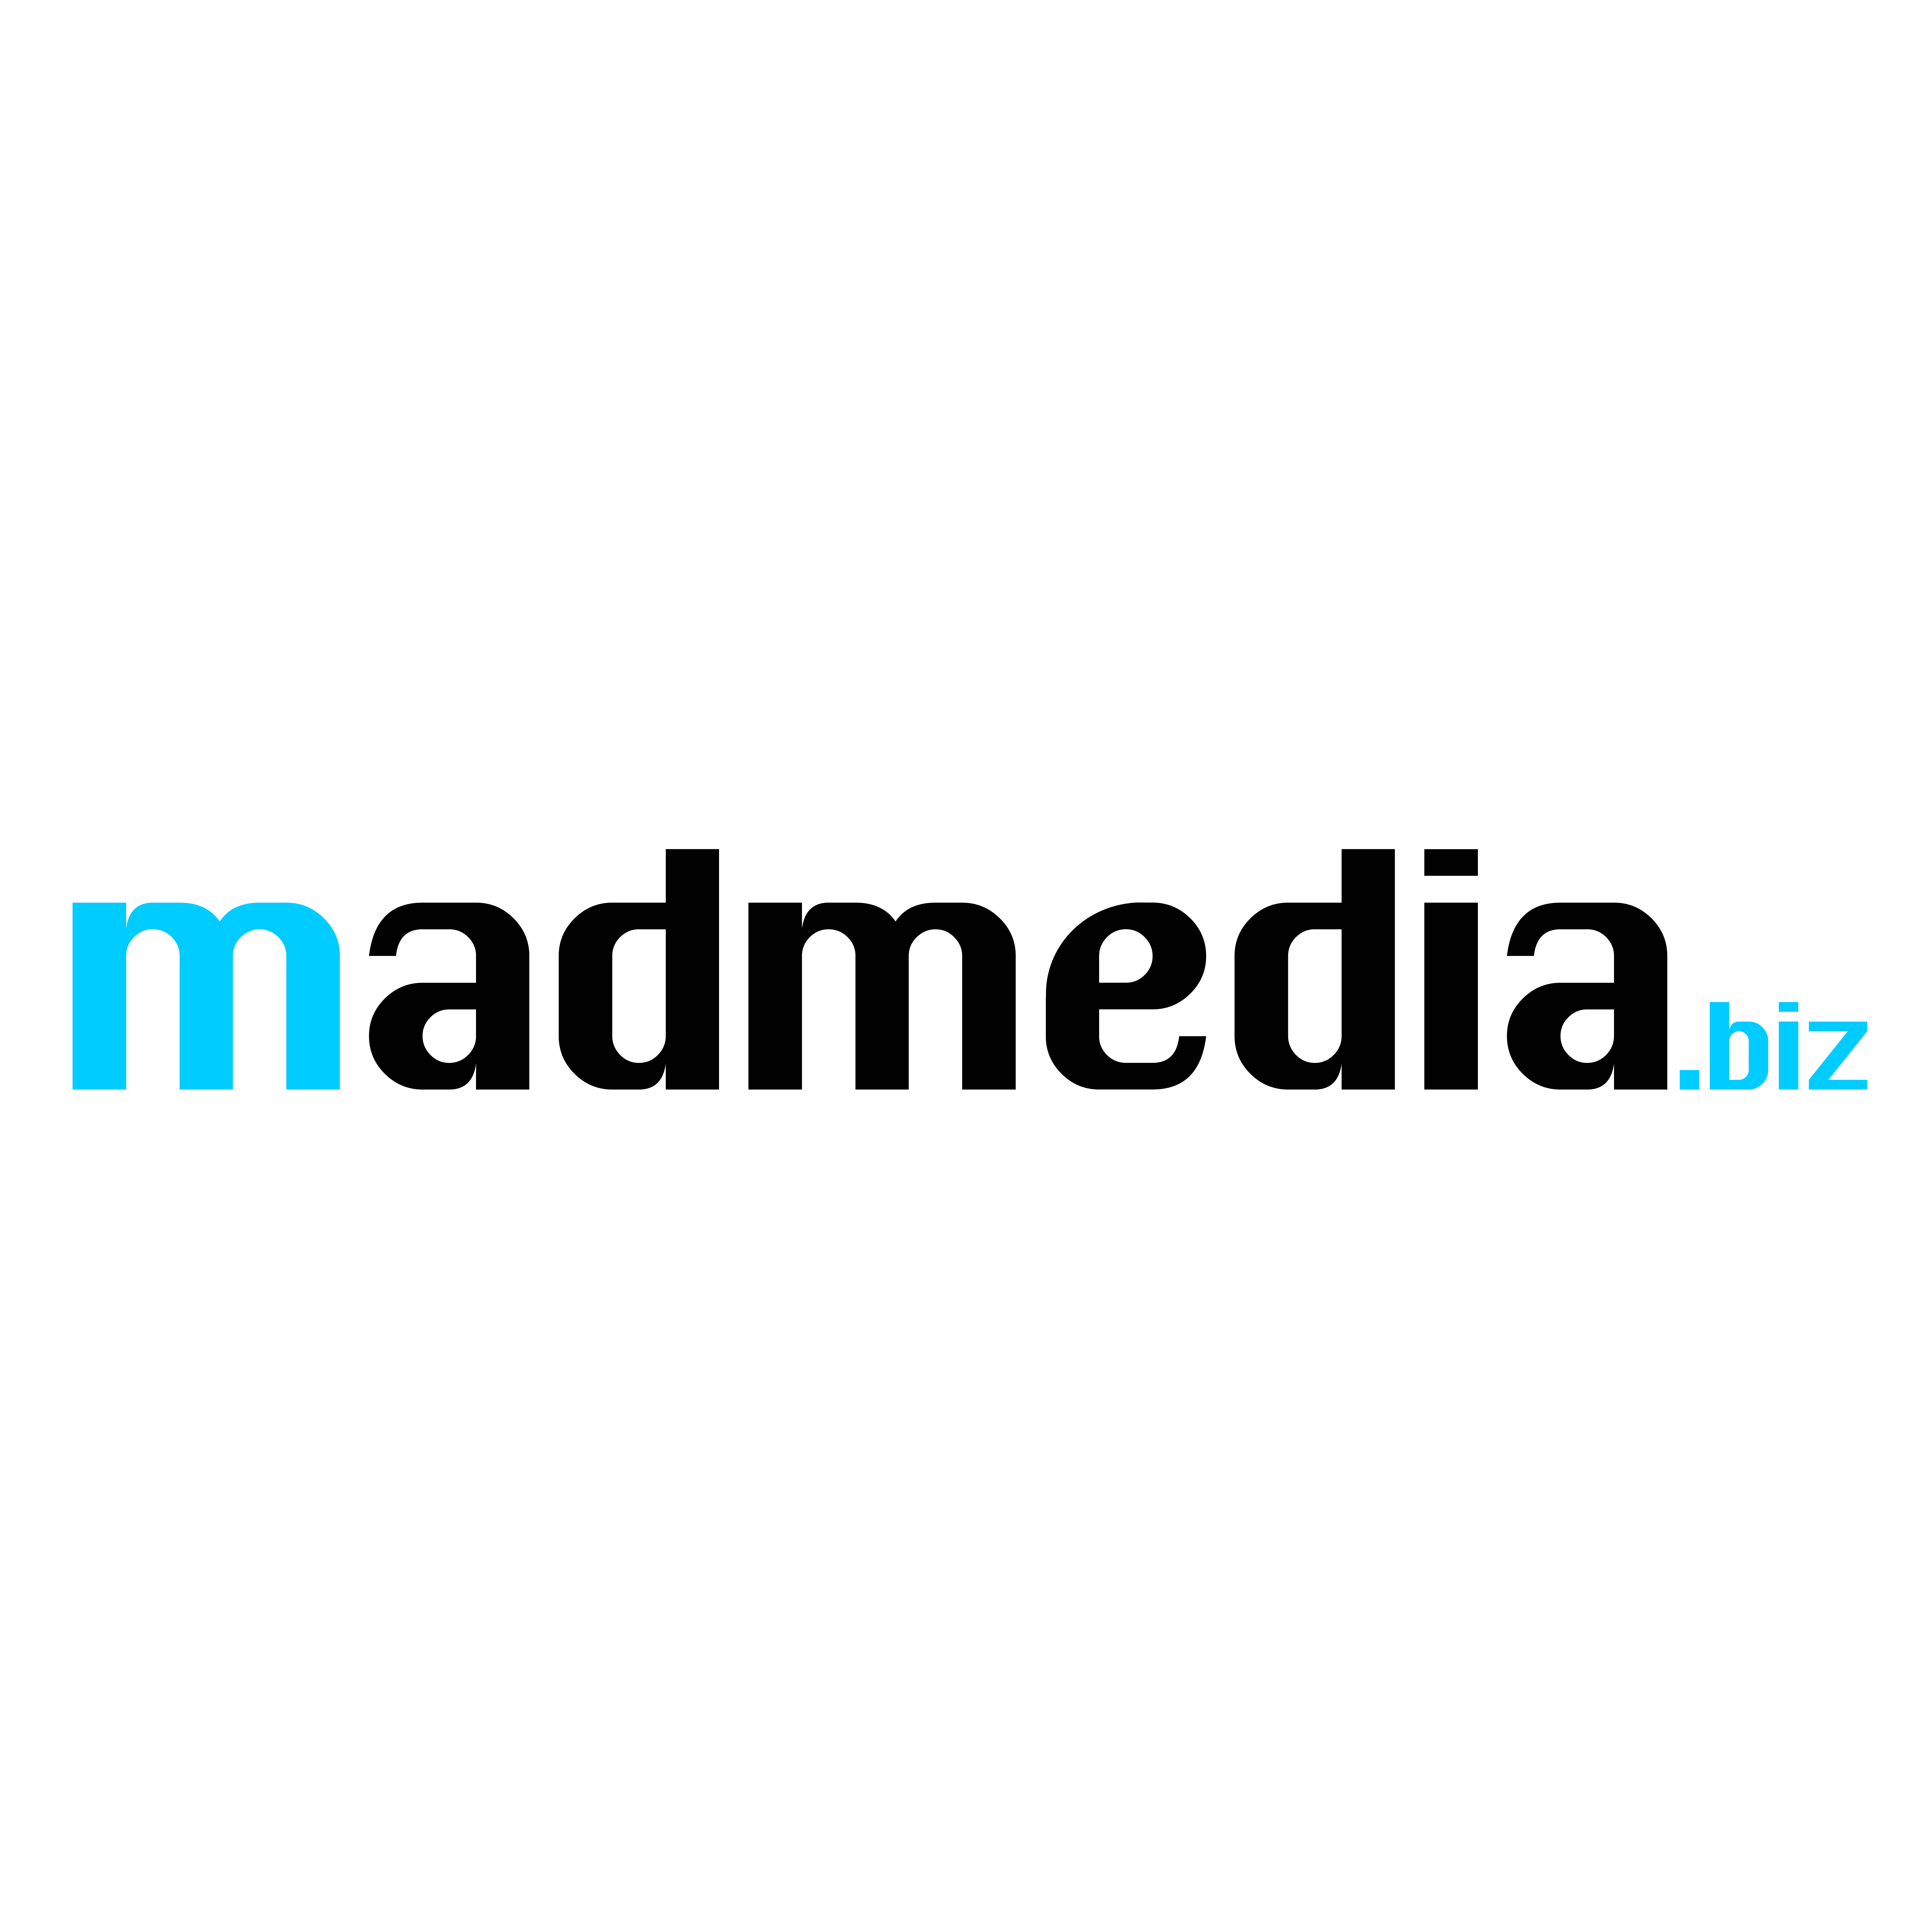 madmedia.biz  